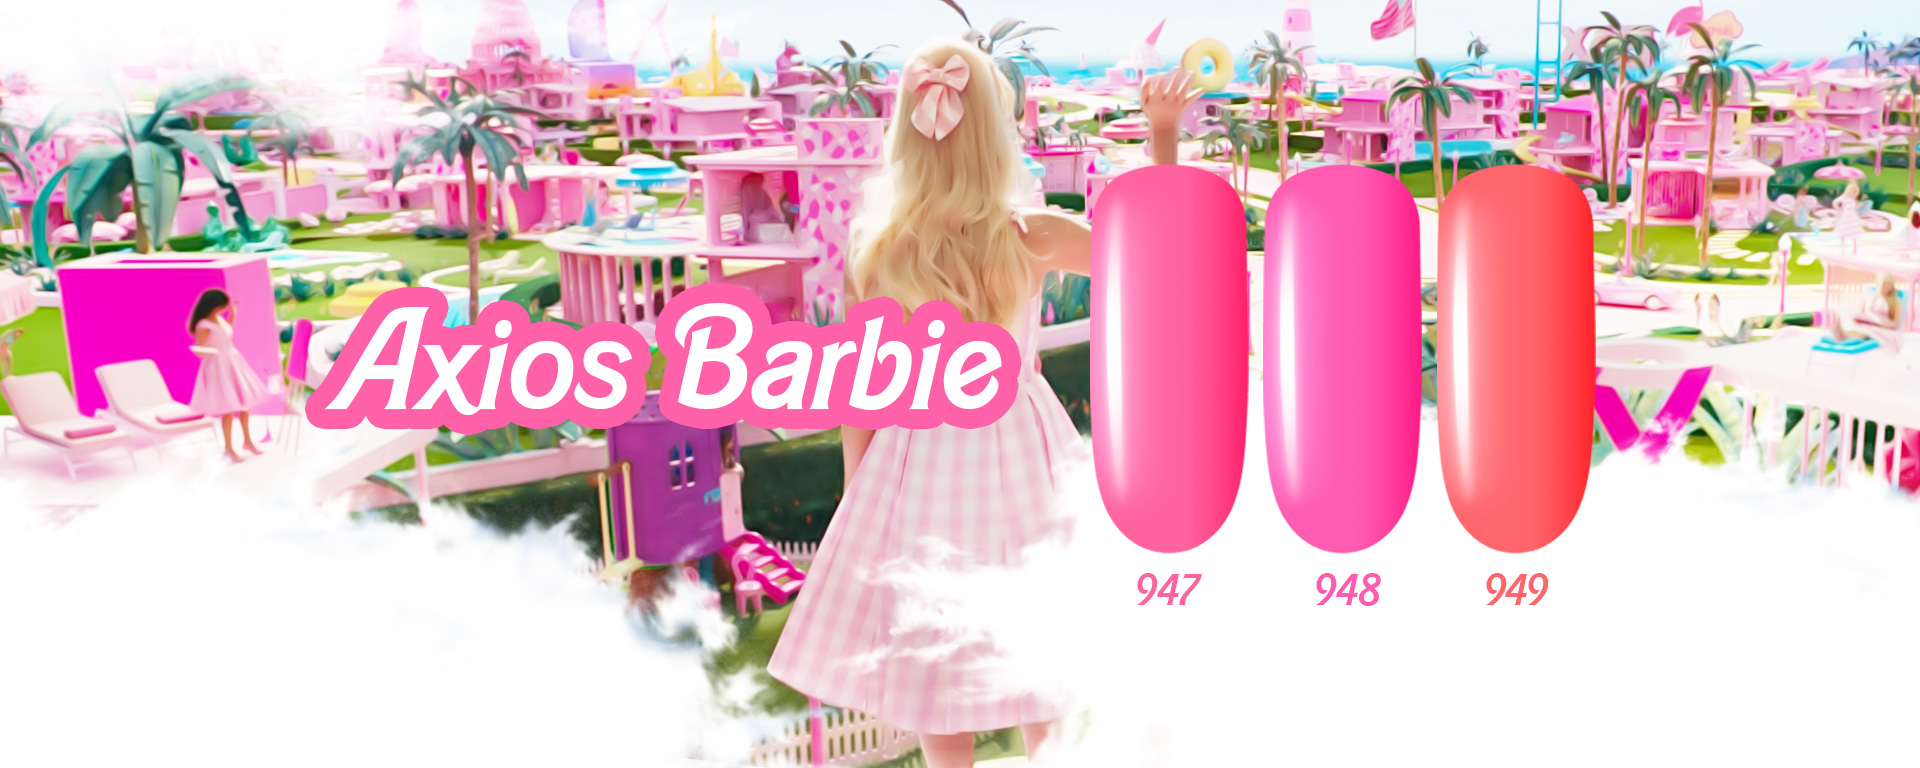 Новинка! Axios Gel x Barbie!